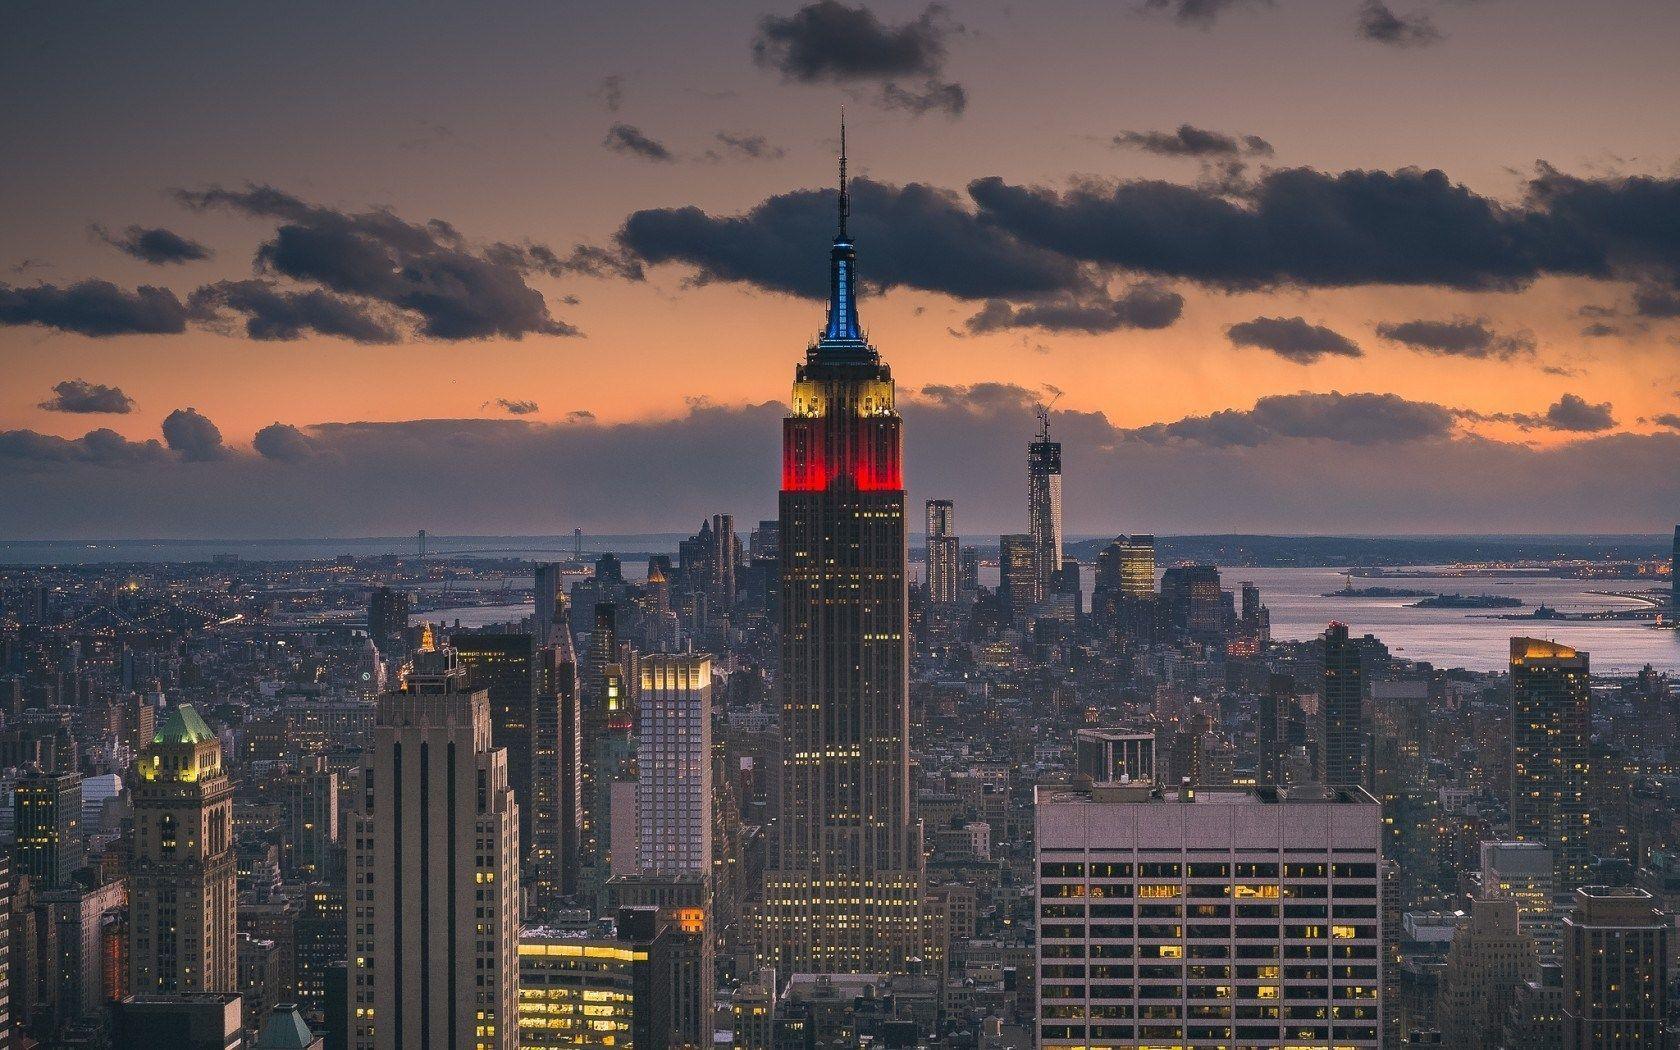 HD Empire State Building Wallpaper